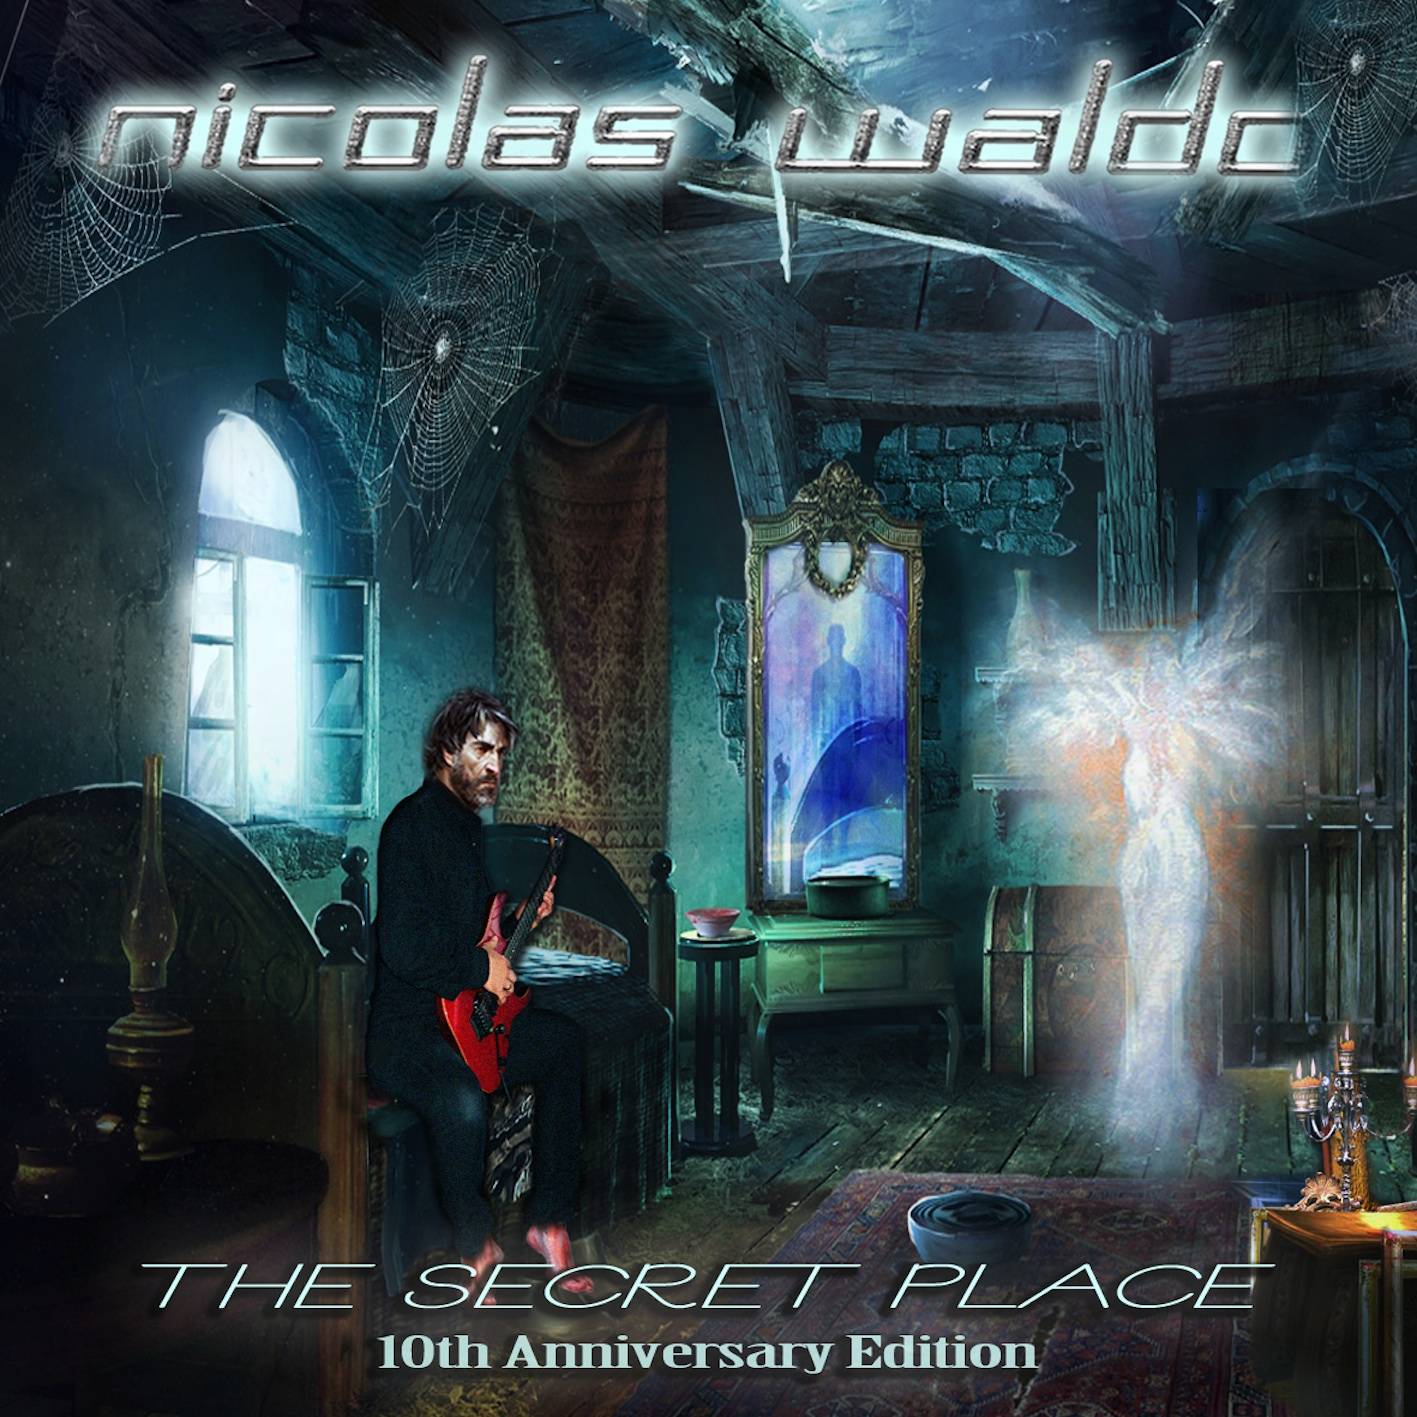 Nicolas Waldo : " The Secret Place" 14th September 2017 (10th Anniversary Edition) Lion Music Records.